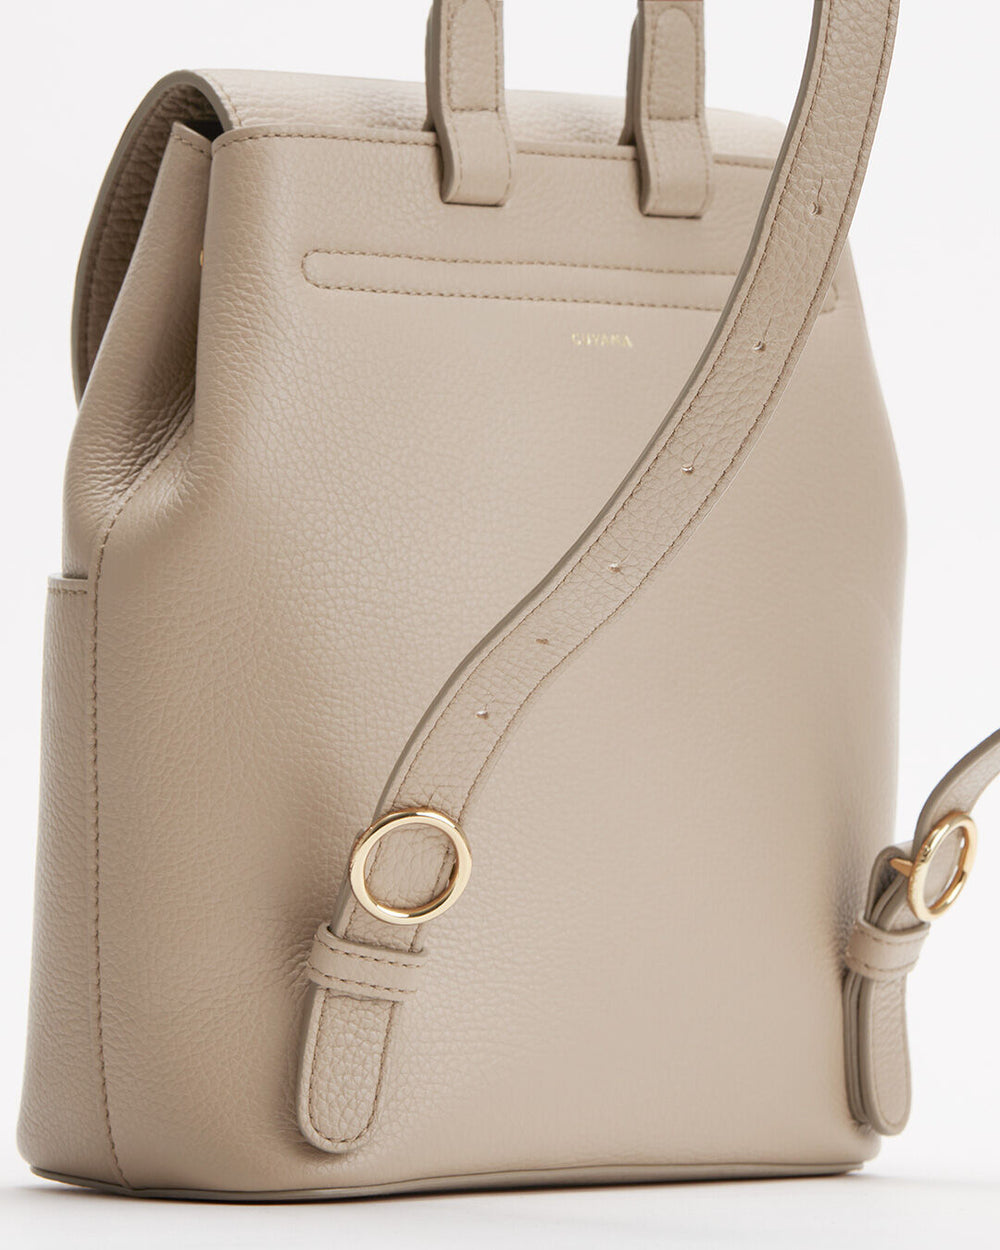 Handbag with a shoulder strap and metallic loop accents.